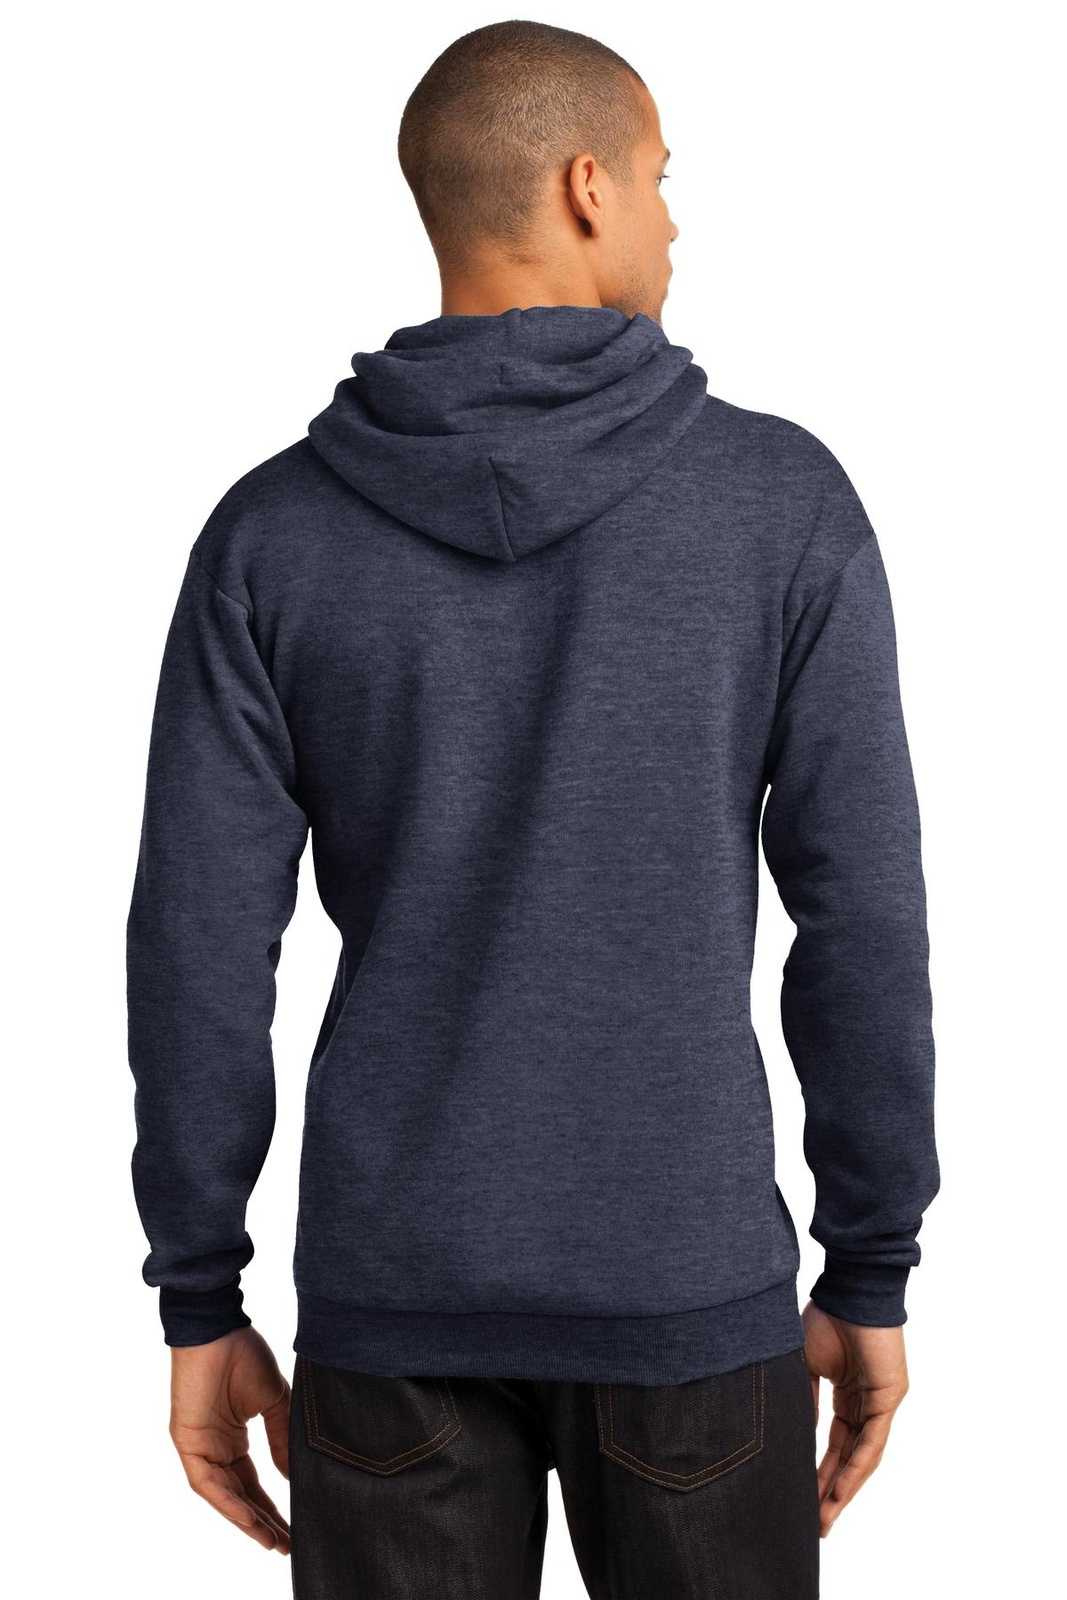 Port & Company PC78H Core Fleece Pullover Hooded Sweatshirt - Heather Navy - HIT a Double - 1